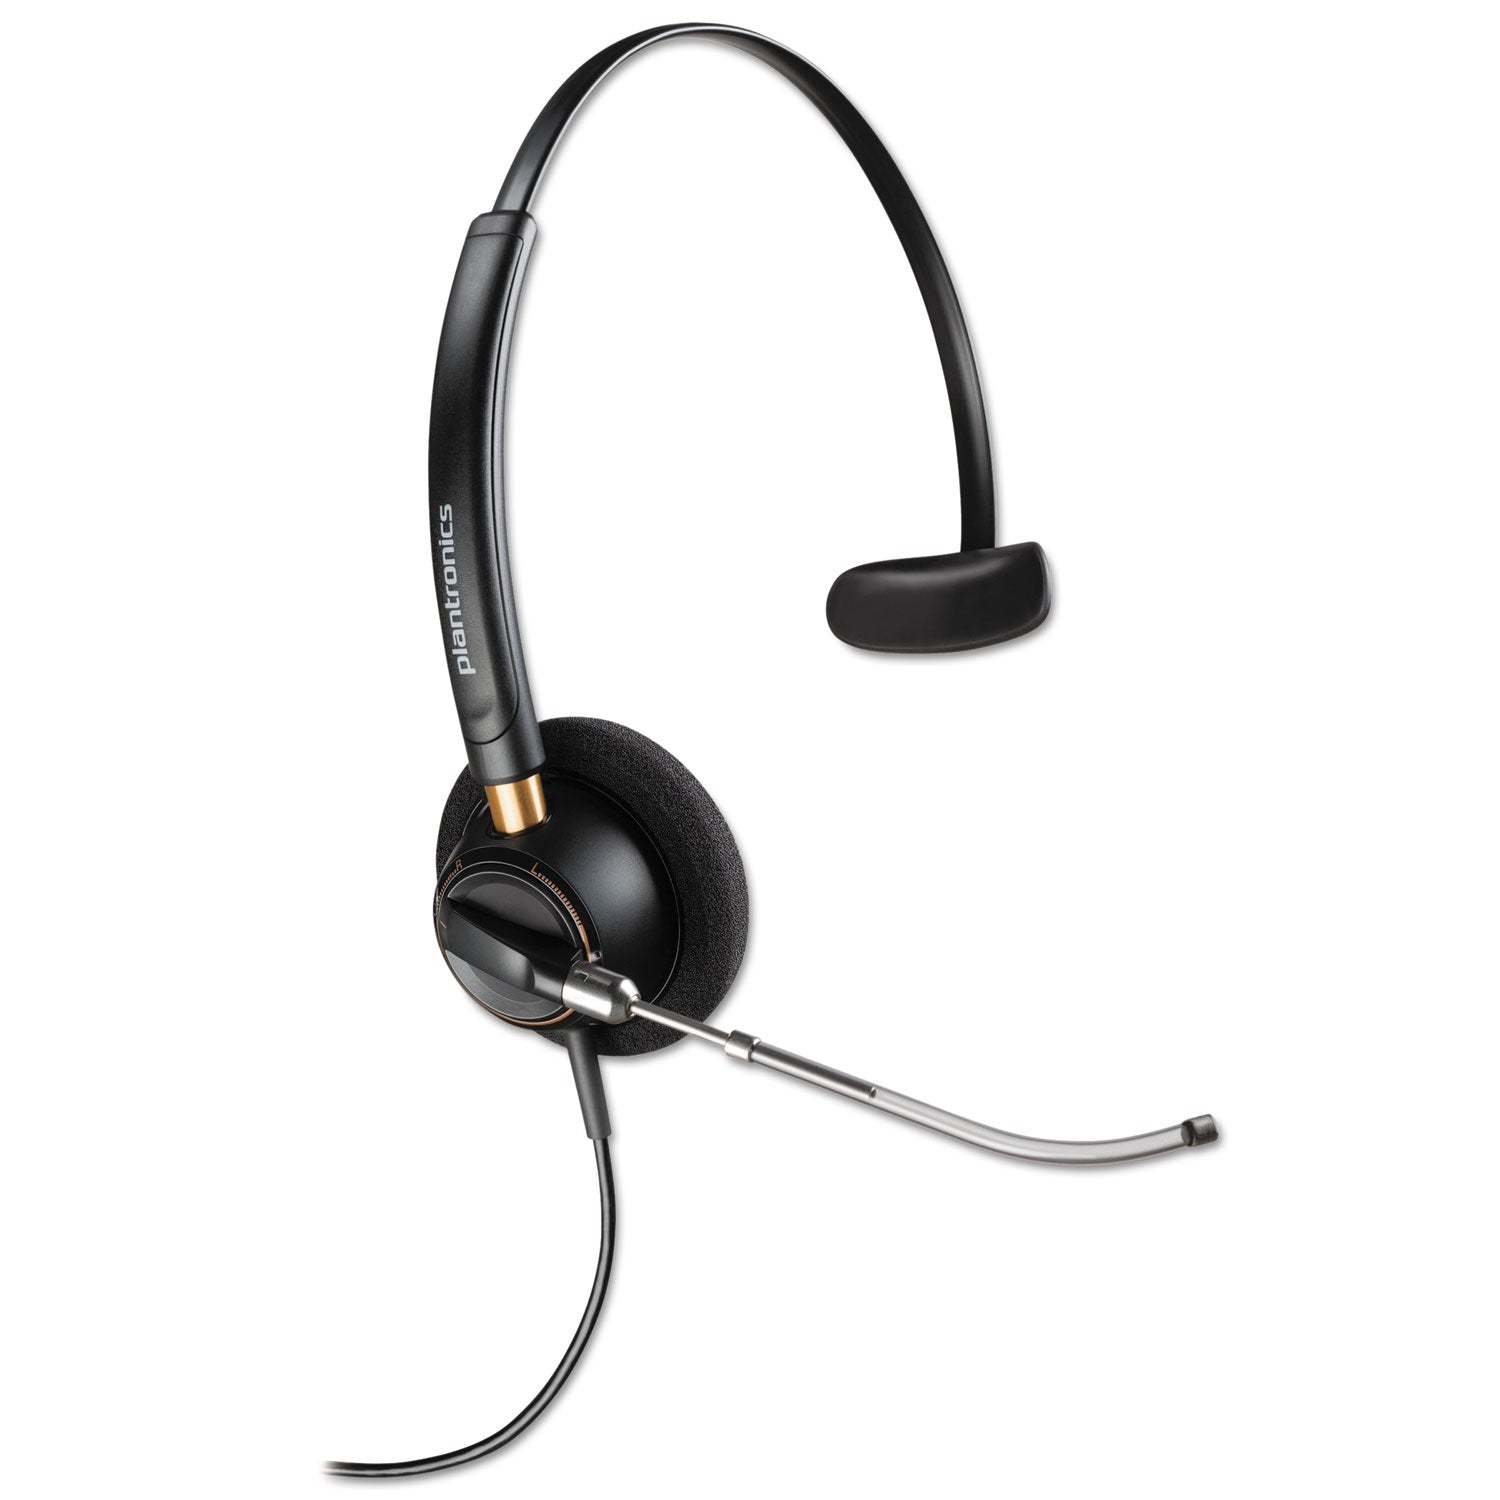 EncorePro 510V Monaural Over The Head Headset, Black - 